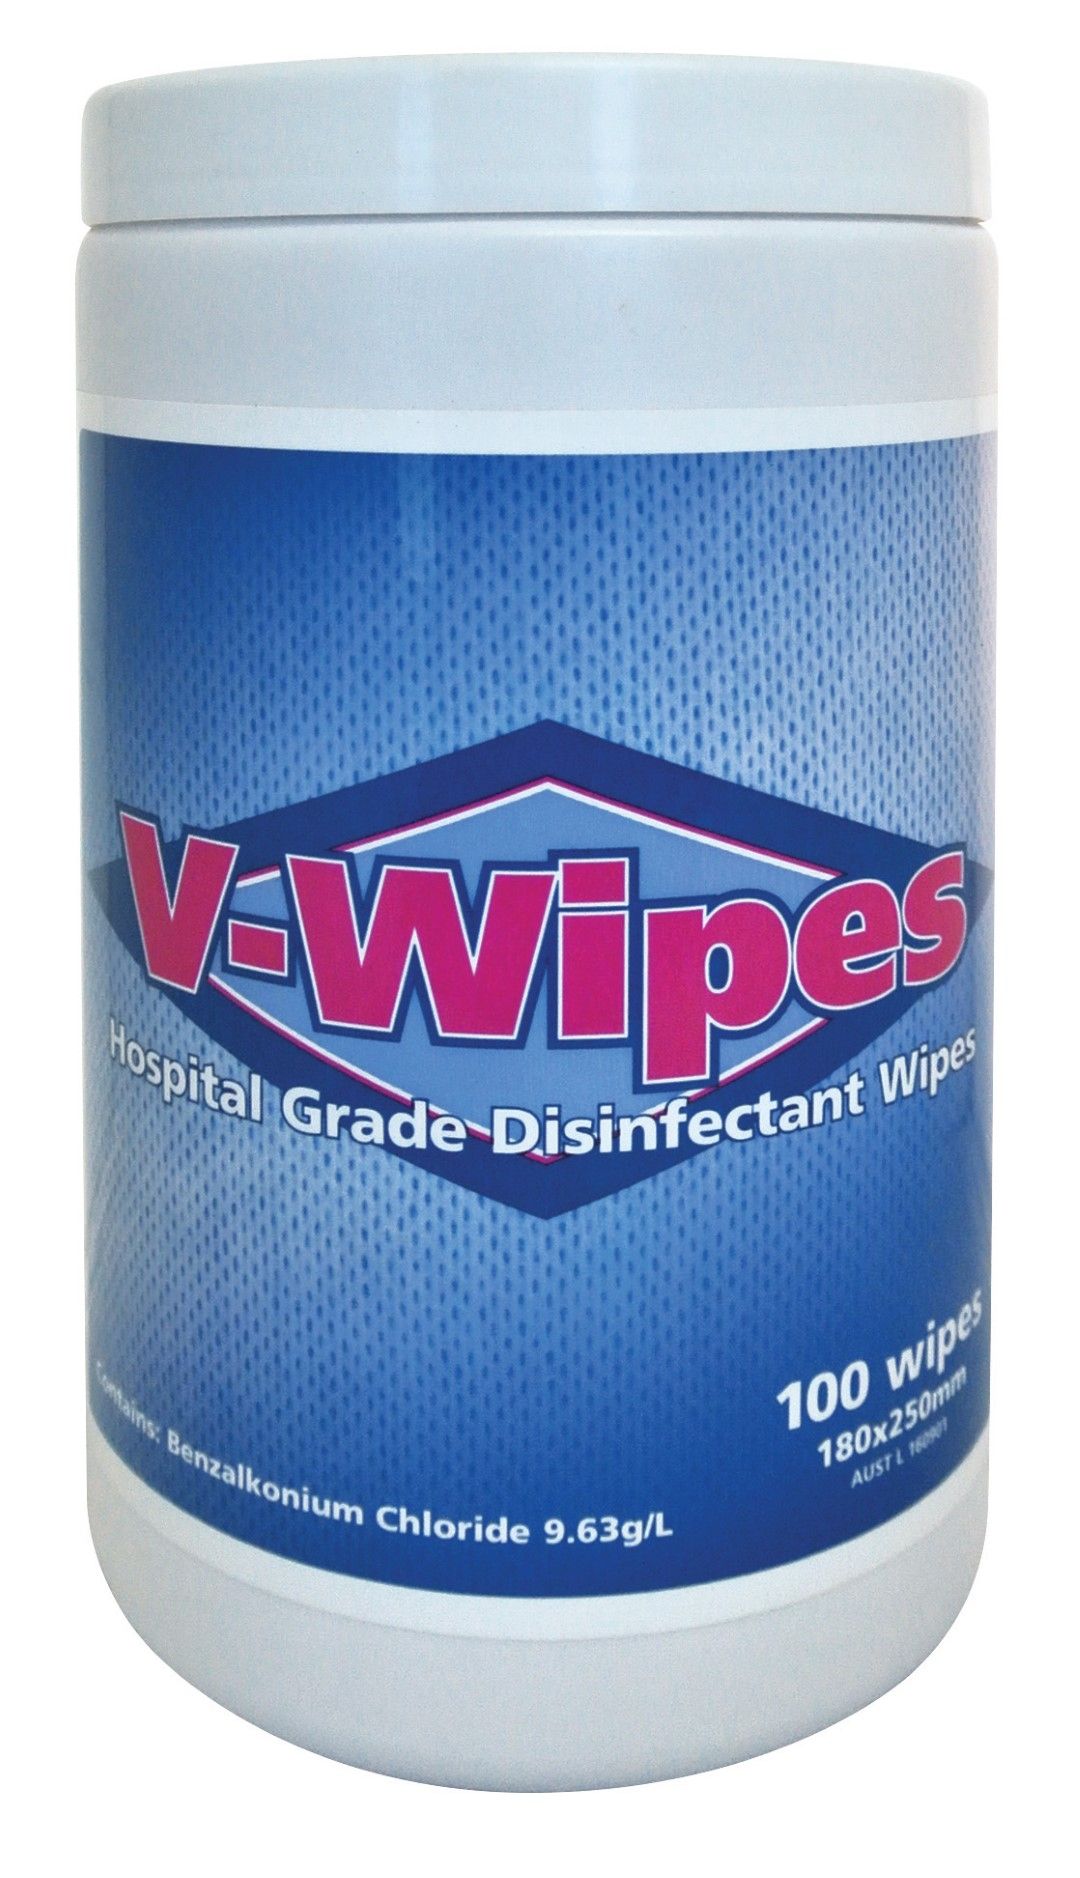 V-WIPES photo